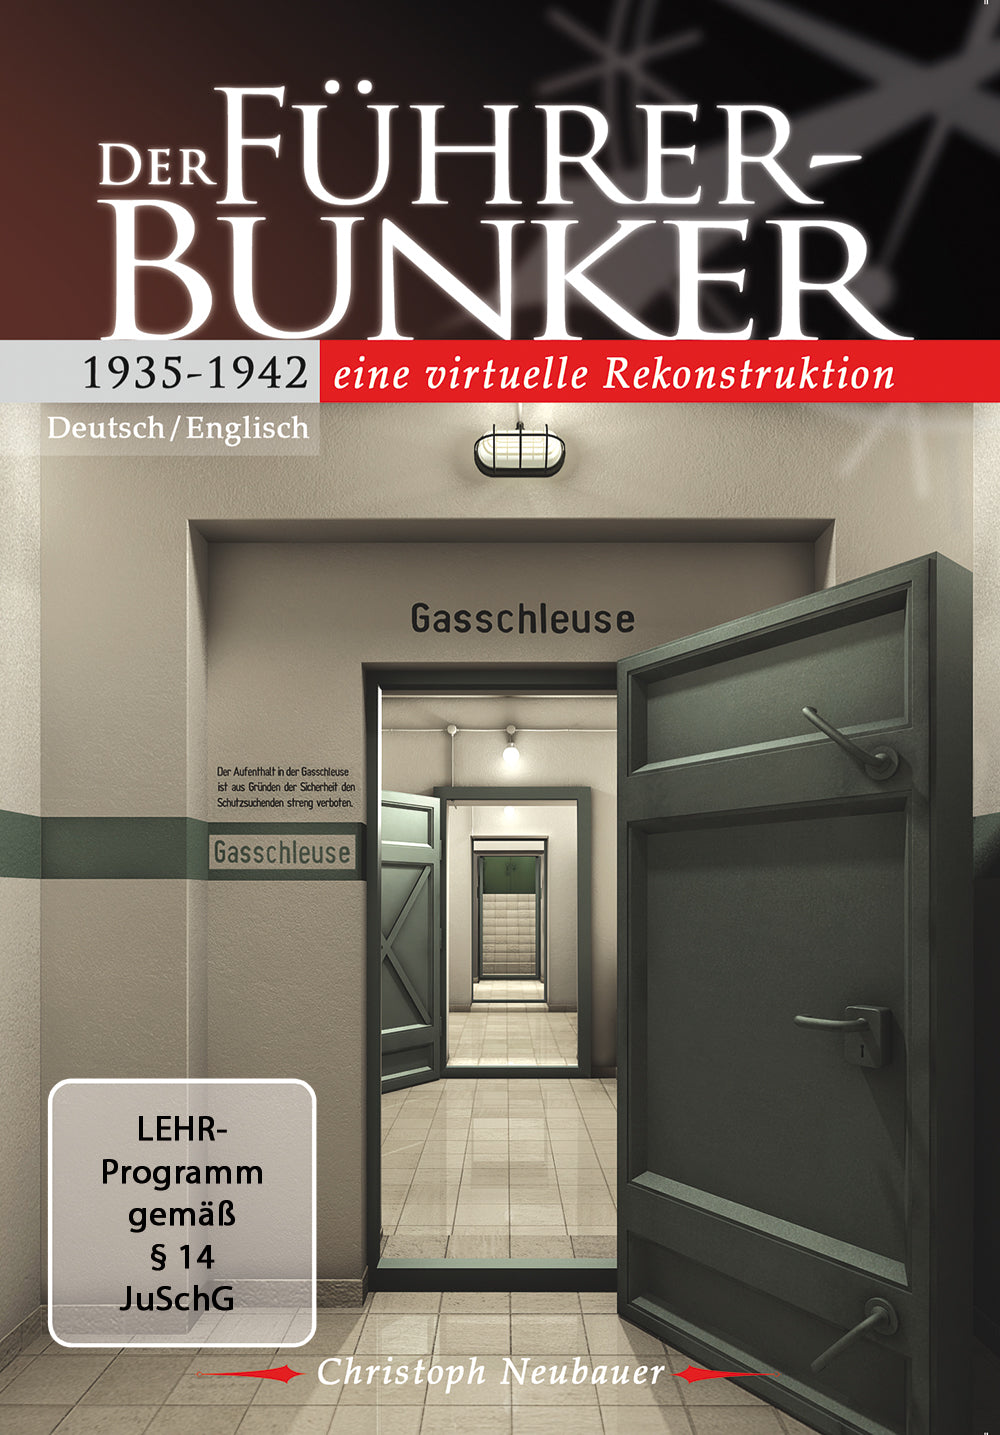 HD-Video-Download "Der Führerbunker (1935-1942)" (German)